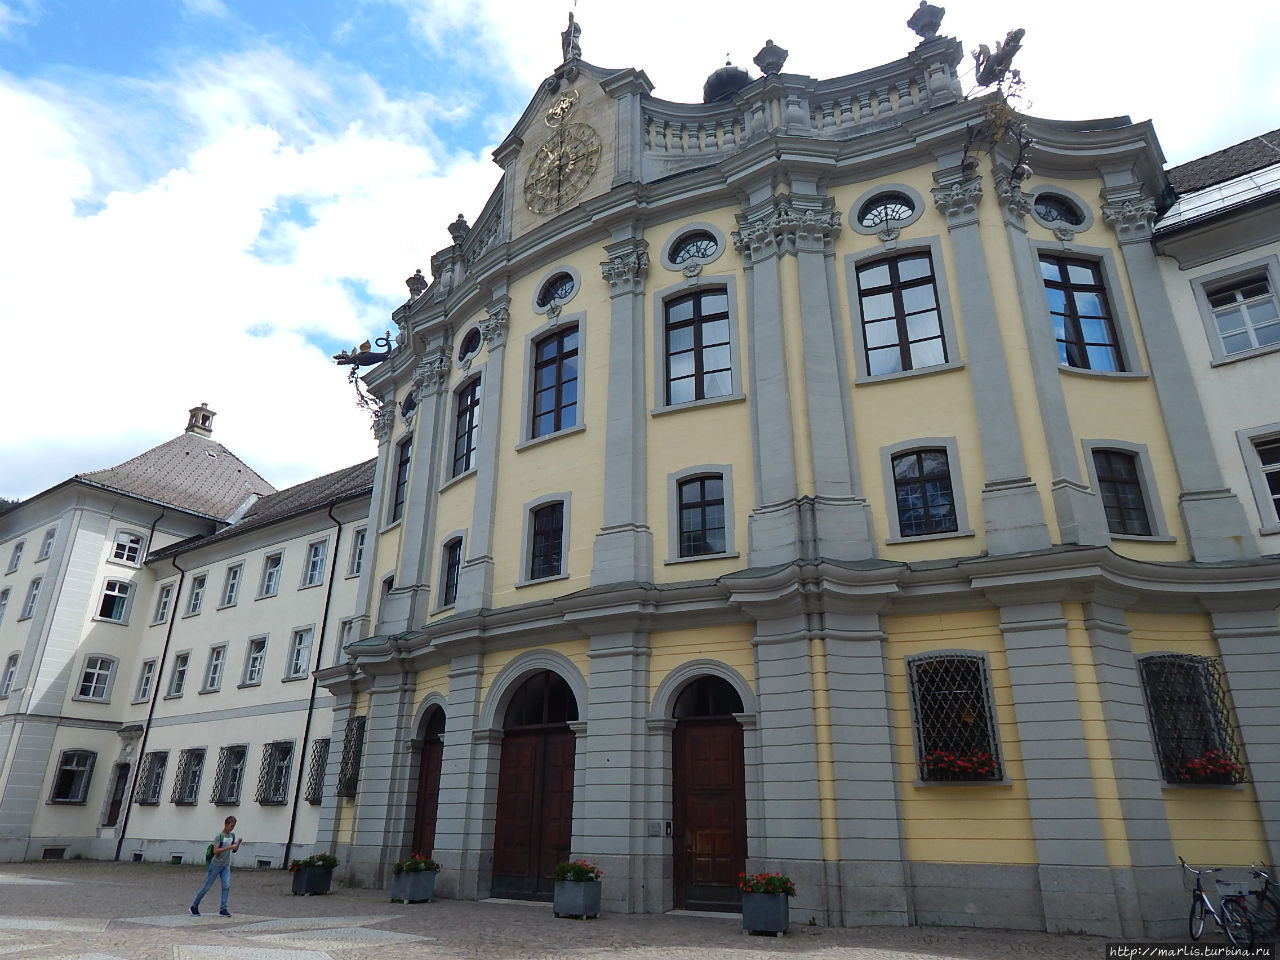 Монастырские здания, XVIII век, теперь колледж Санкт-Блазиен, Германия